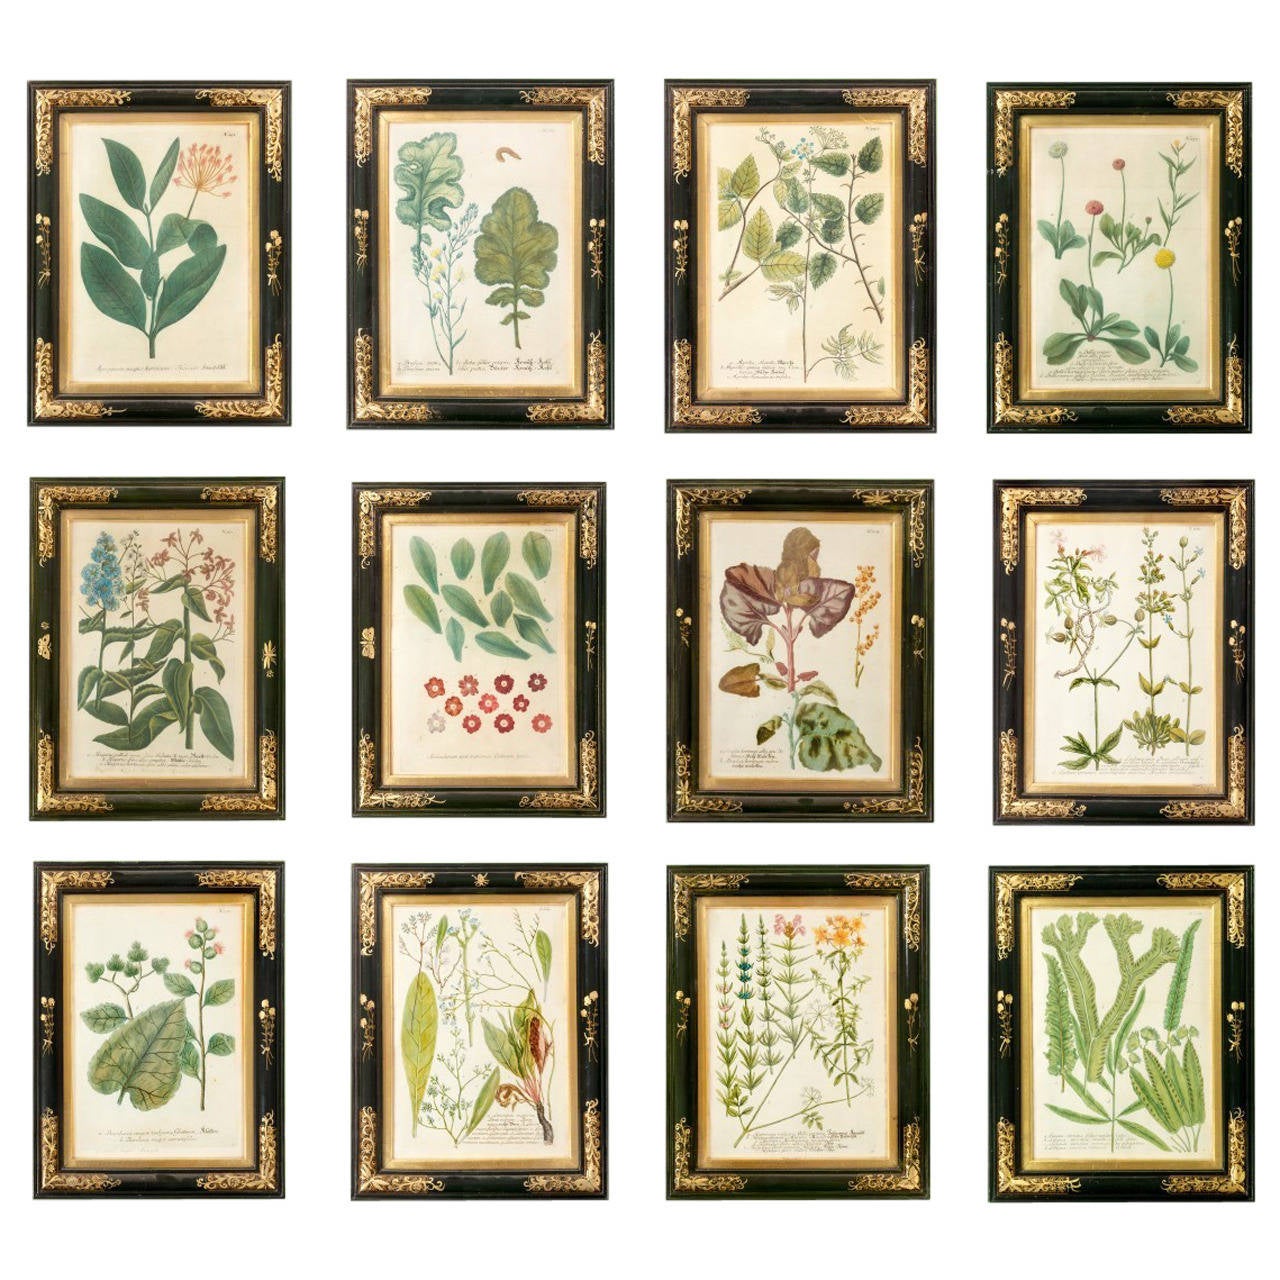 Collectionof 12 botanical prints For Sale